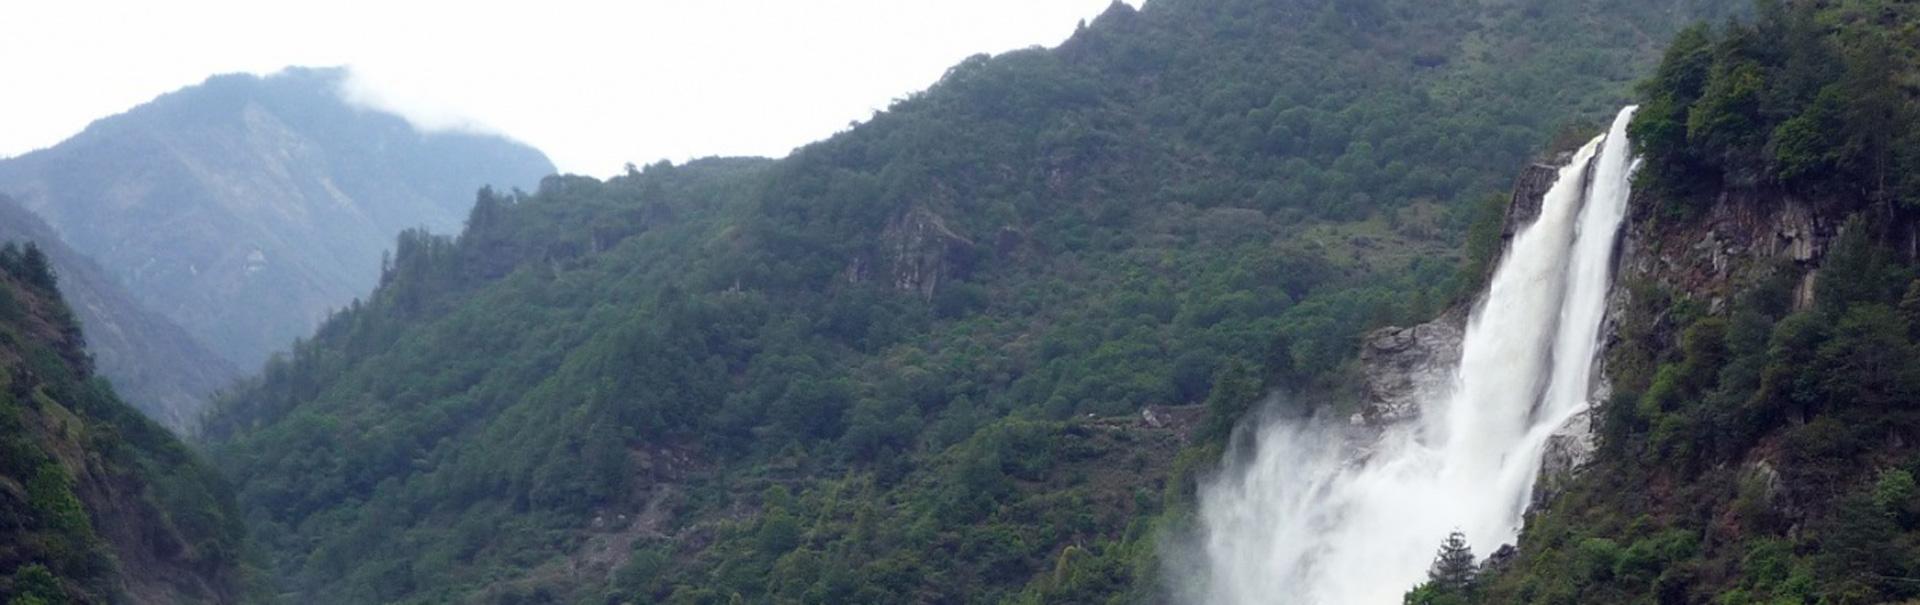 Nuranang Water Falls